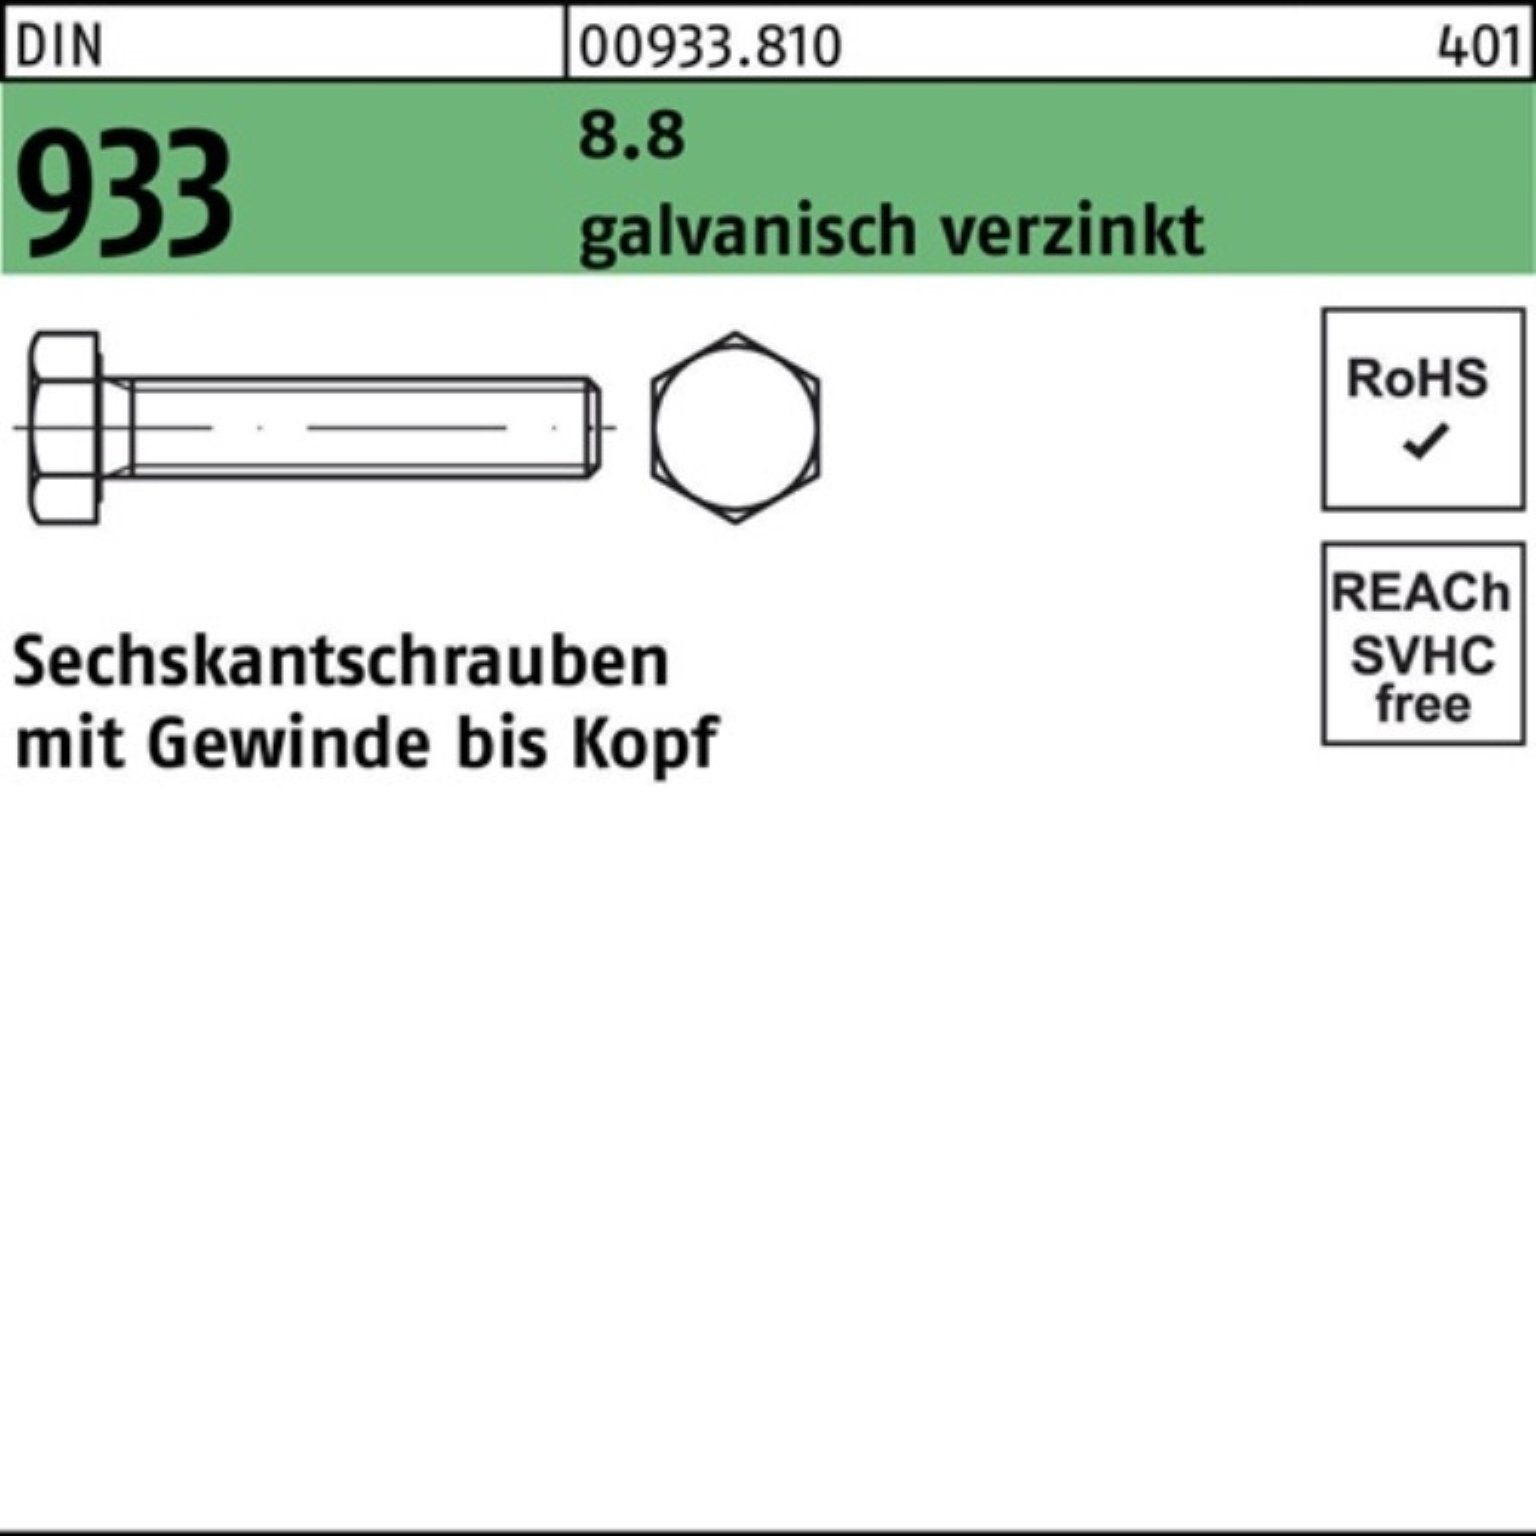 galv.verz. 933 VG Stü 100er M33x Sechskantschraube 200 DIN 8.8 1 Reyher Pack Sechskantschraube